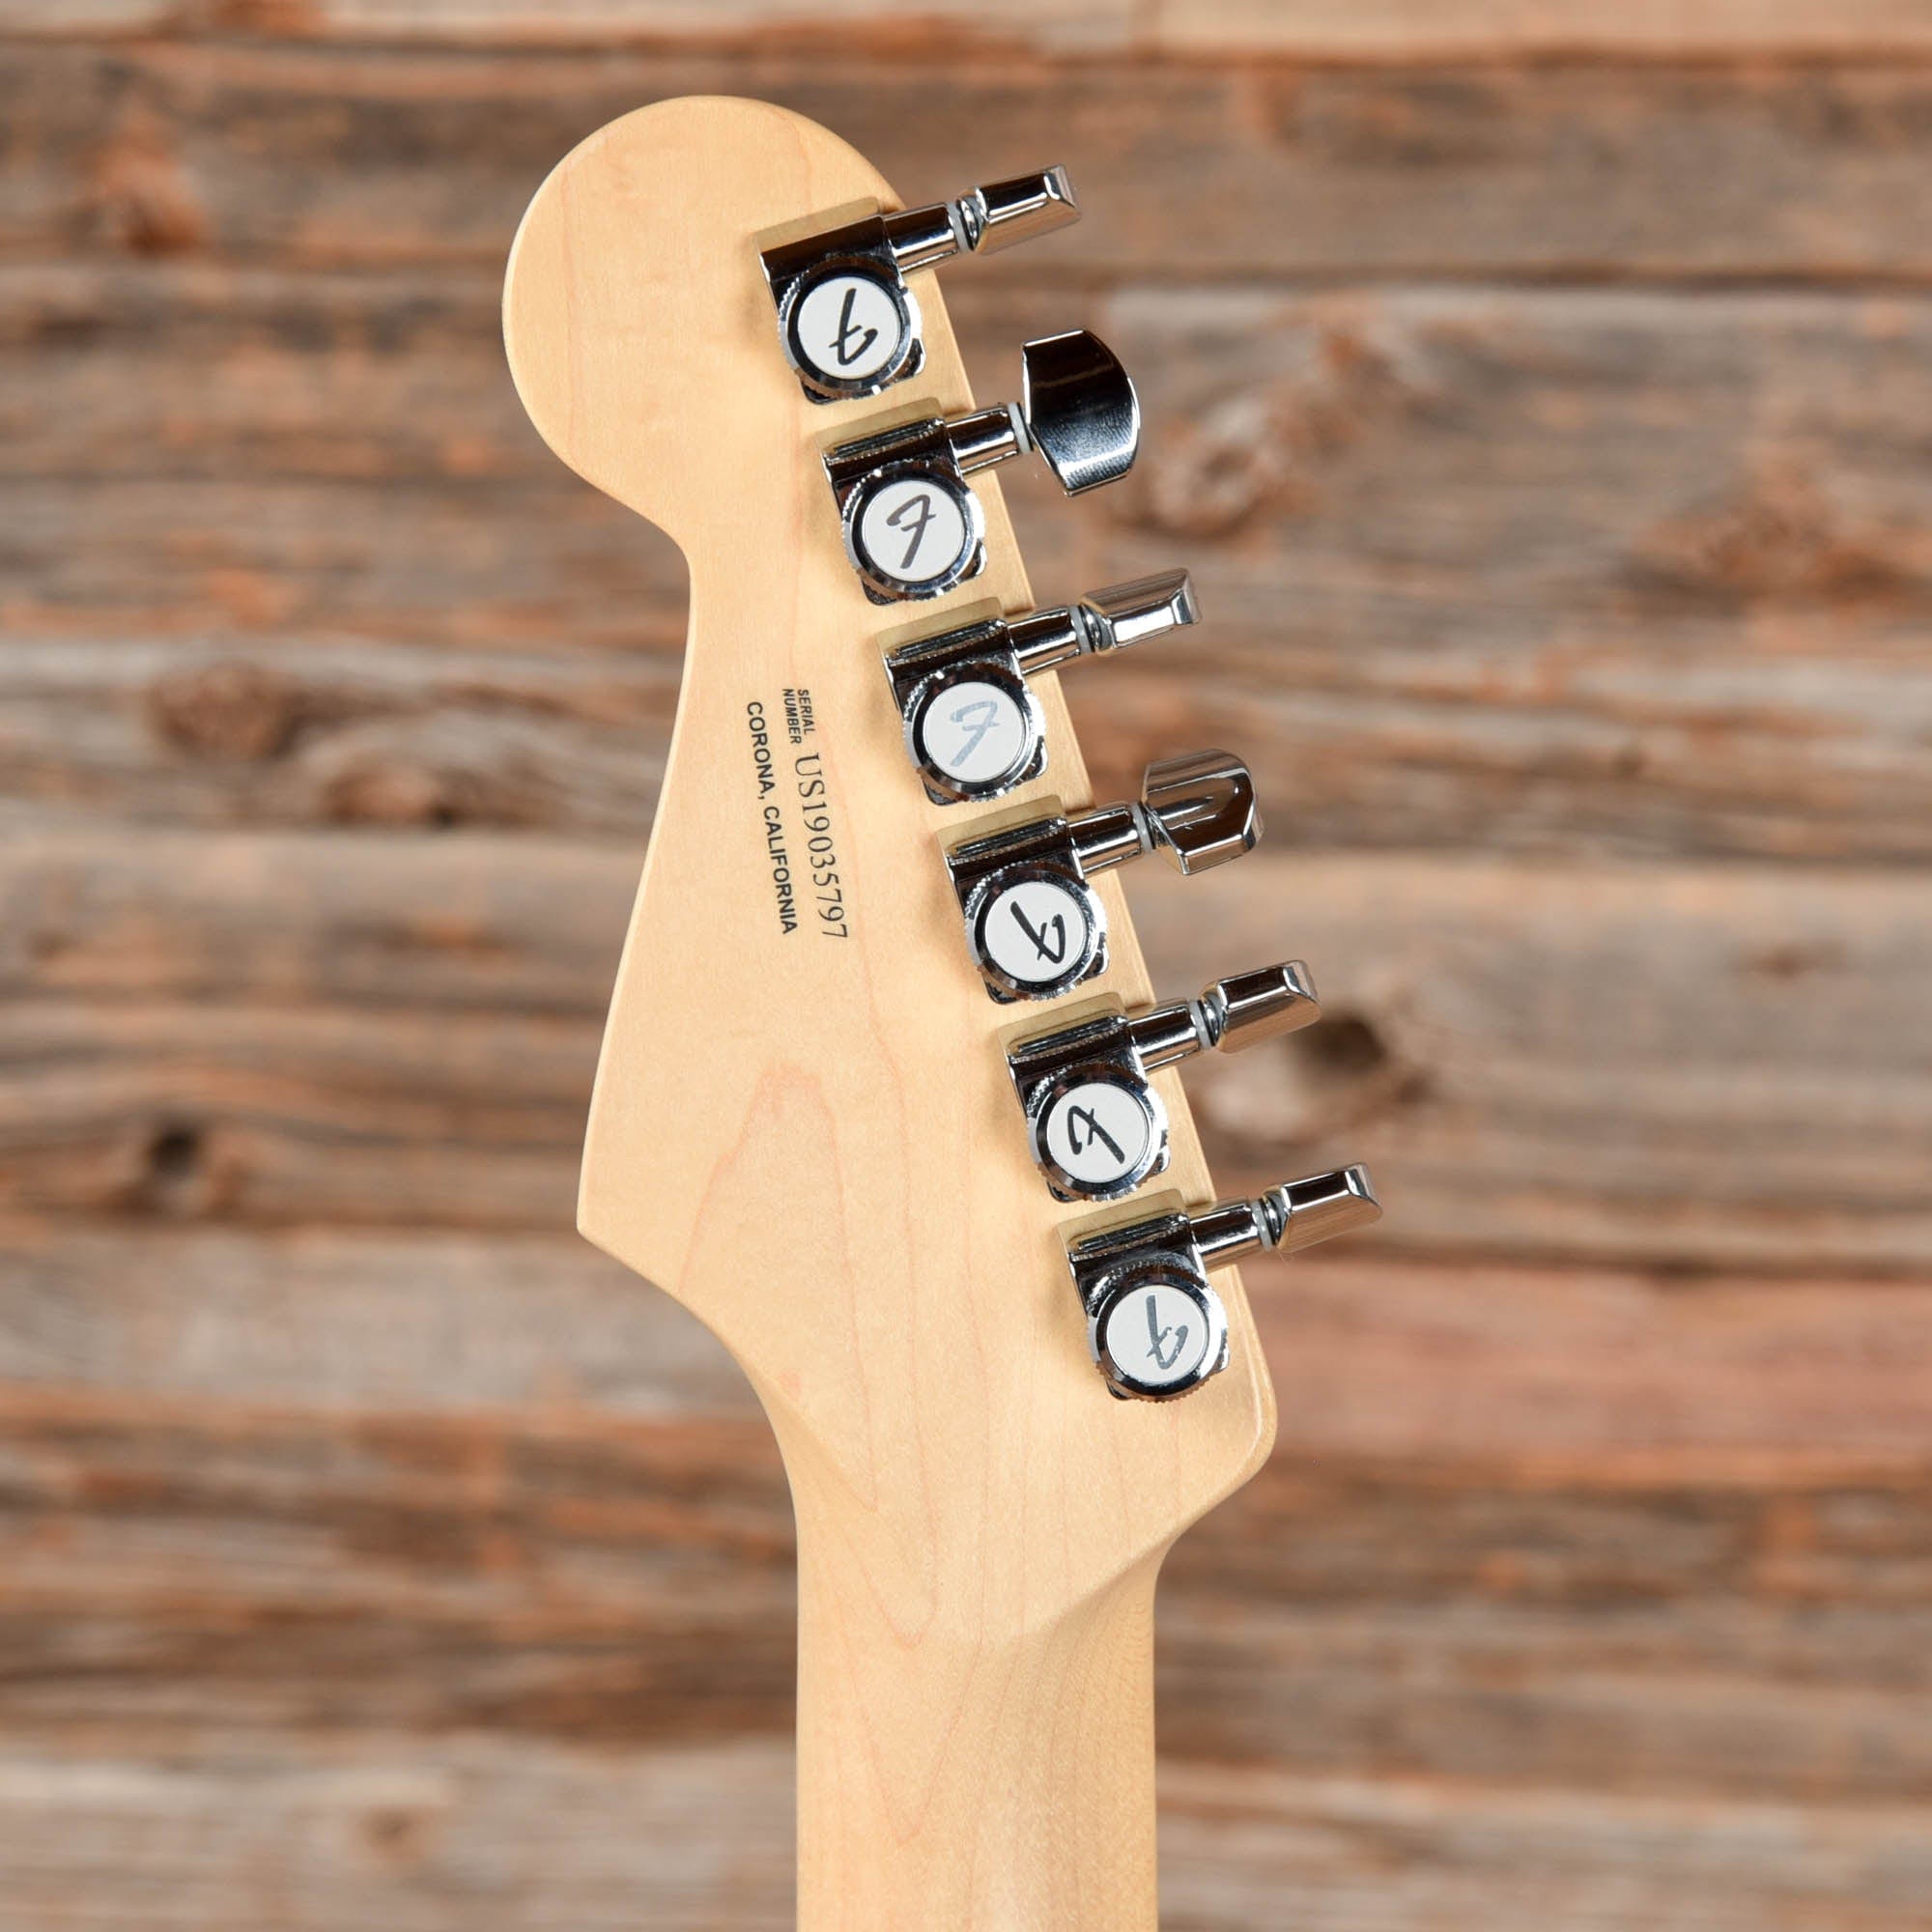 Fender American Elite Stratocaster Aged Cherry Sunburst 2019 Electric Guitars / Solid Body